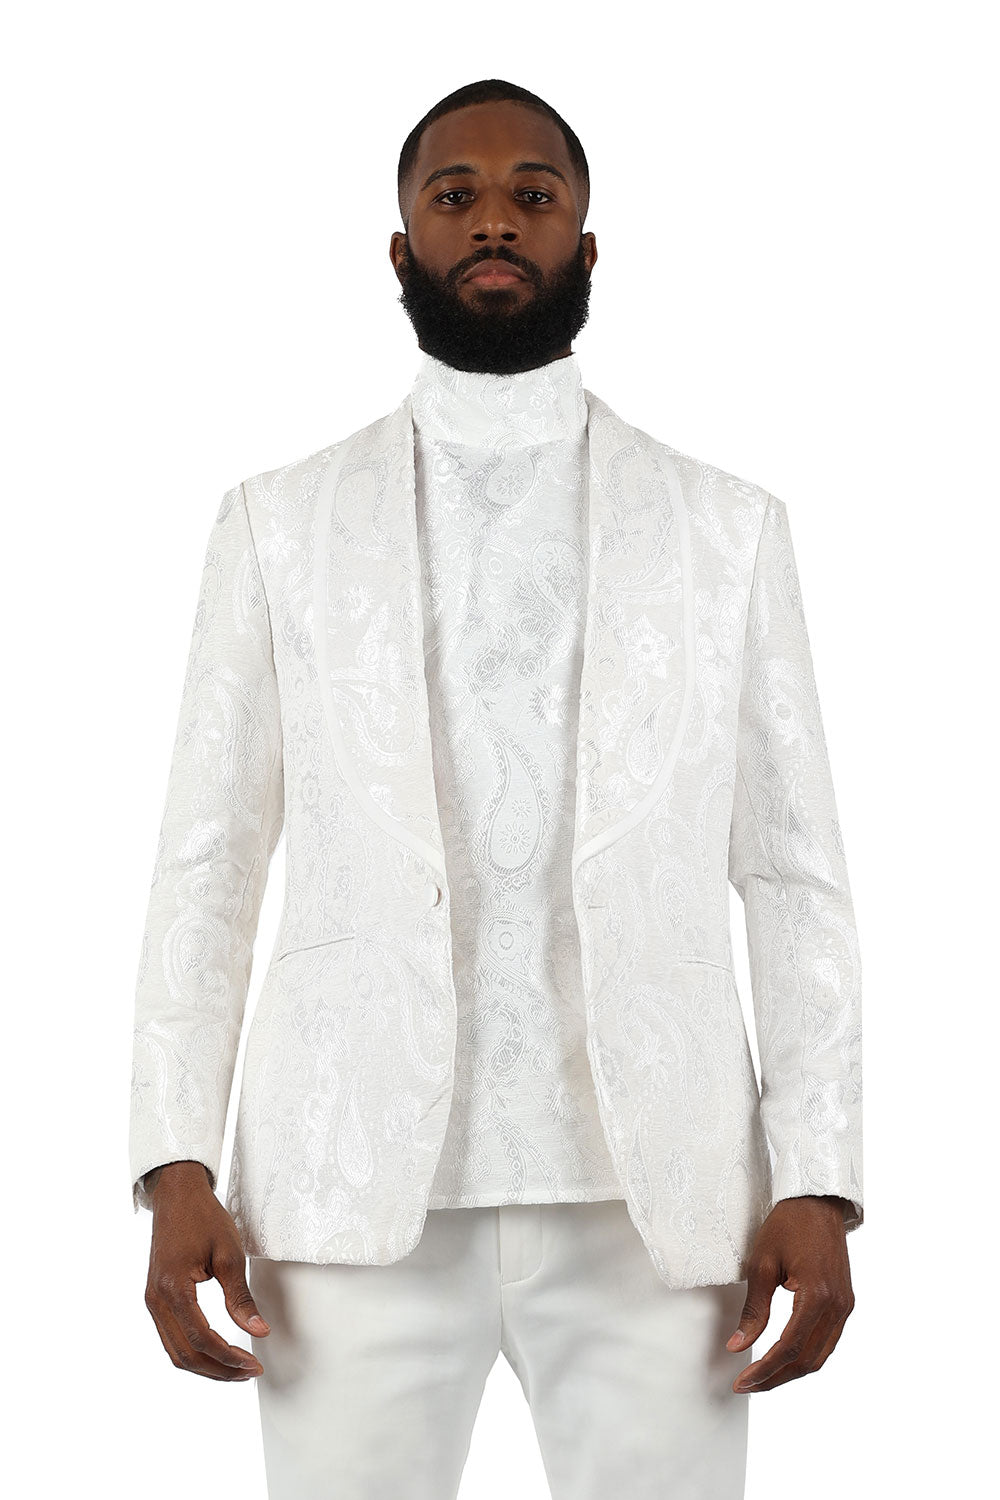 BARABAS Men's Paisley Shawl Lapel Luxury Blazer 2BL3101 White White